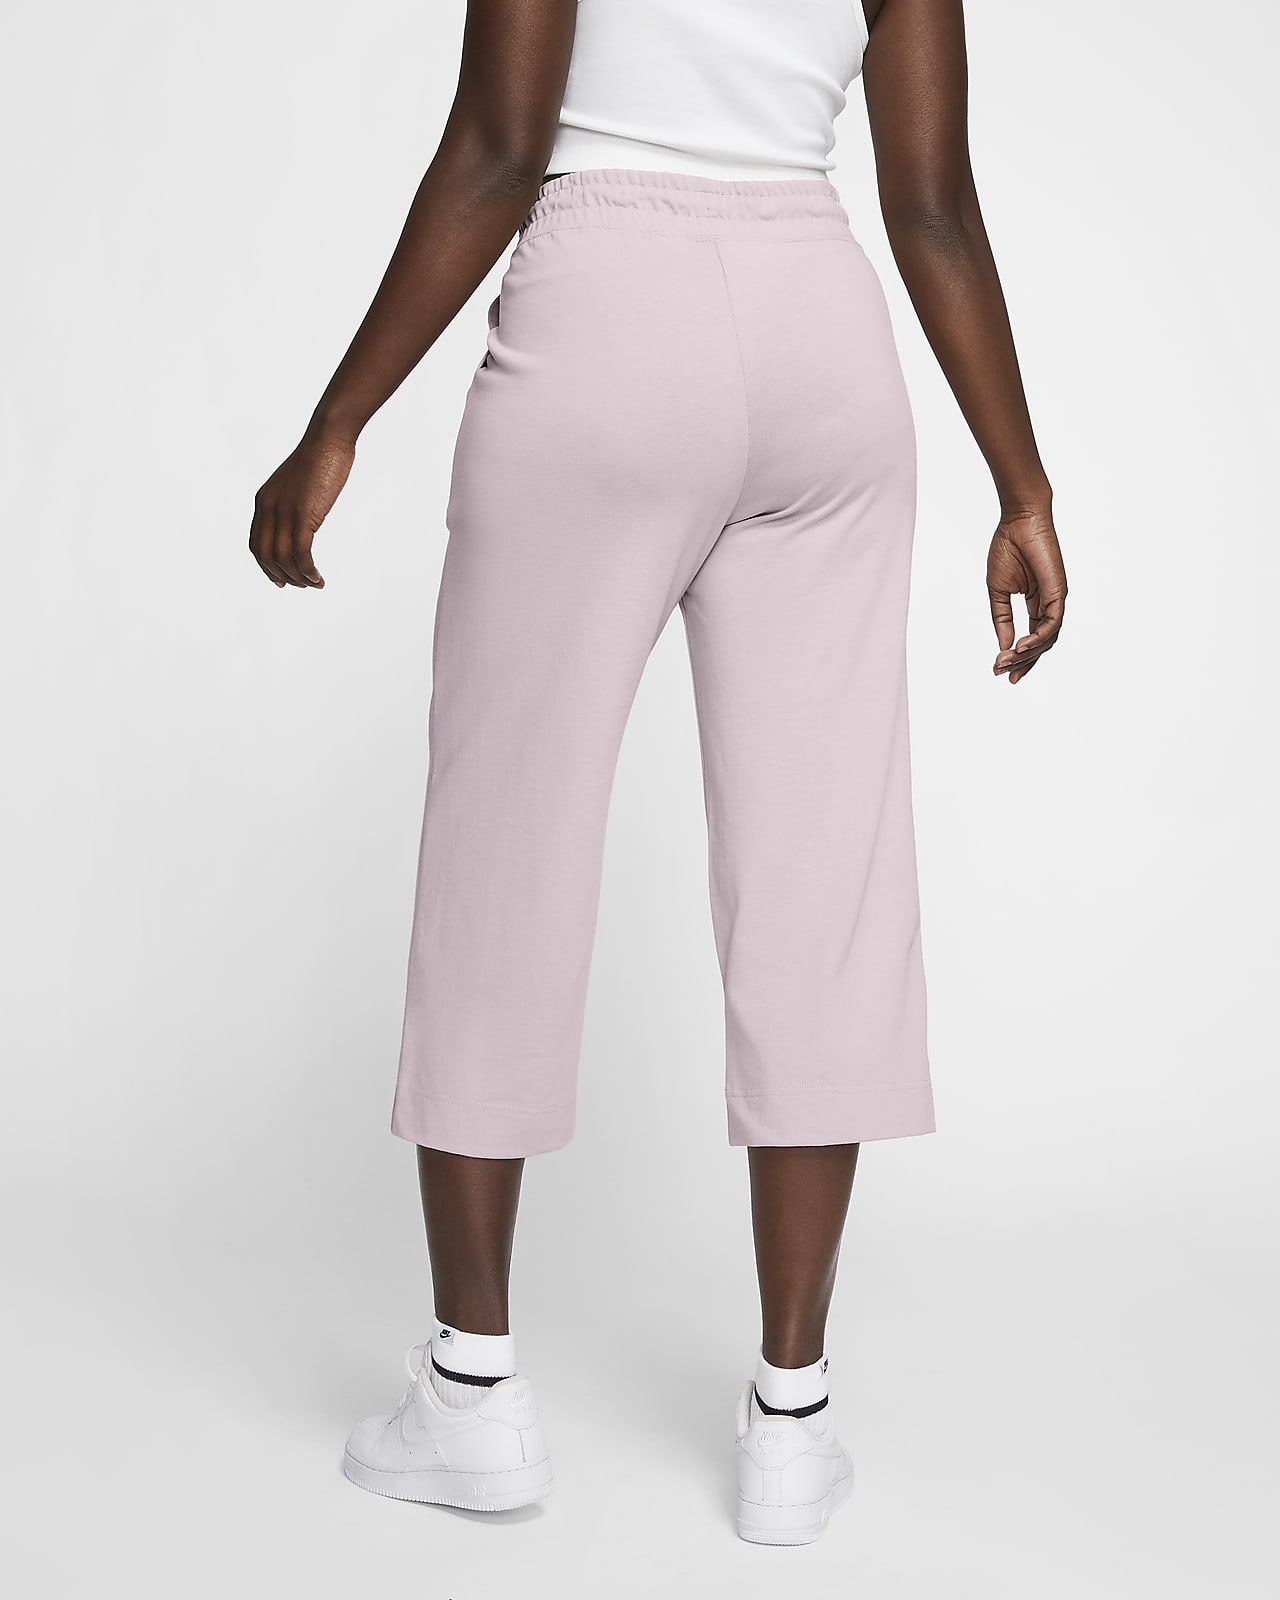 Nike jersey capri pants in pink